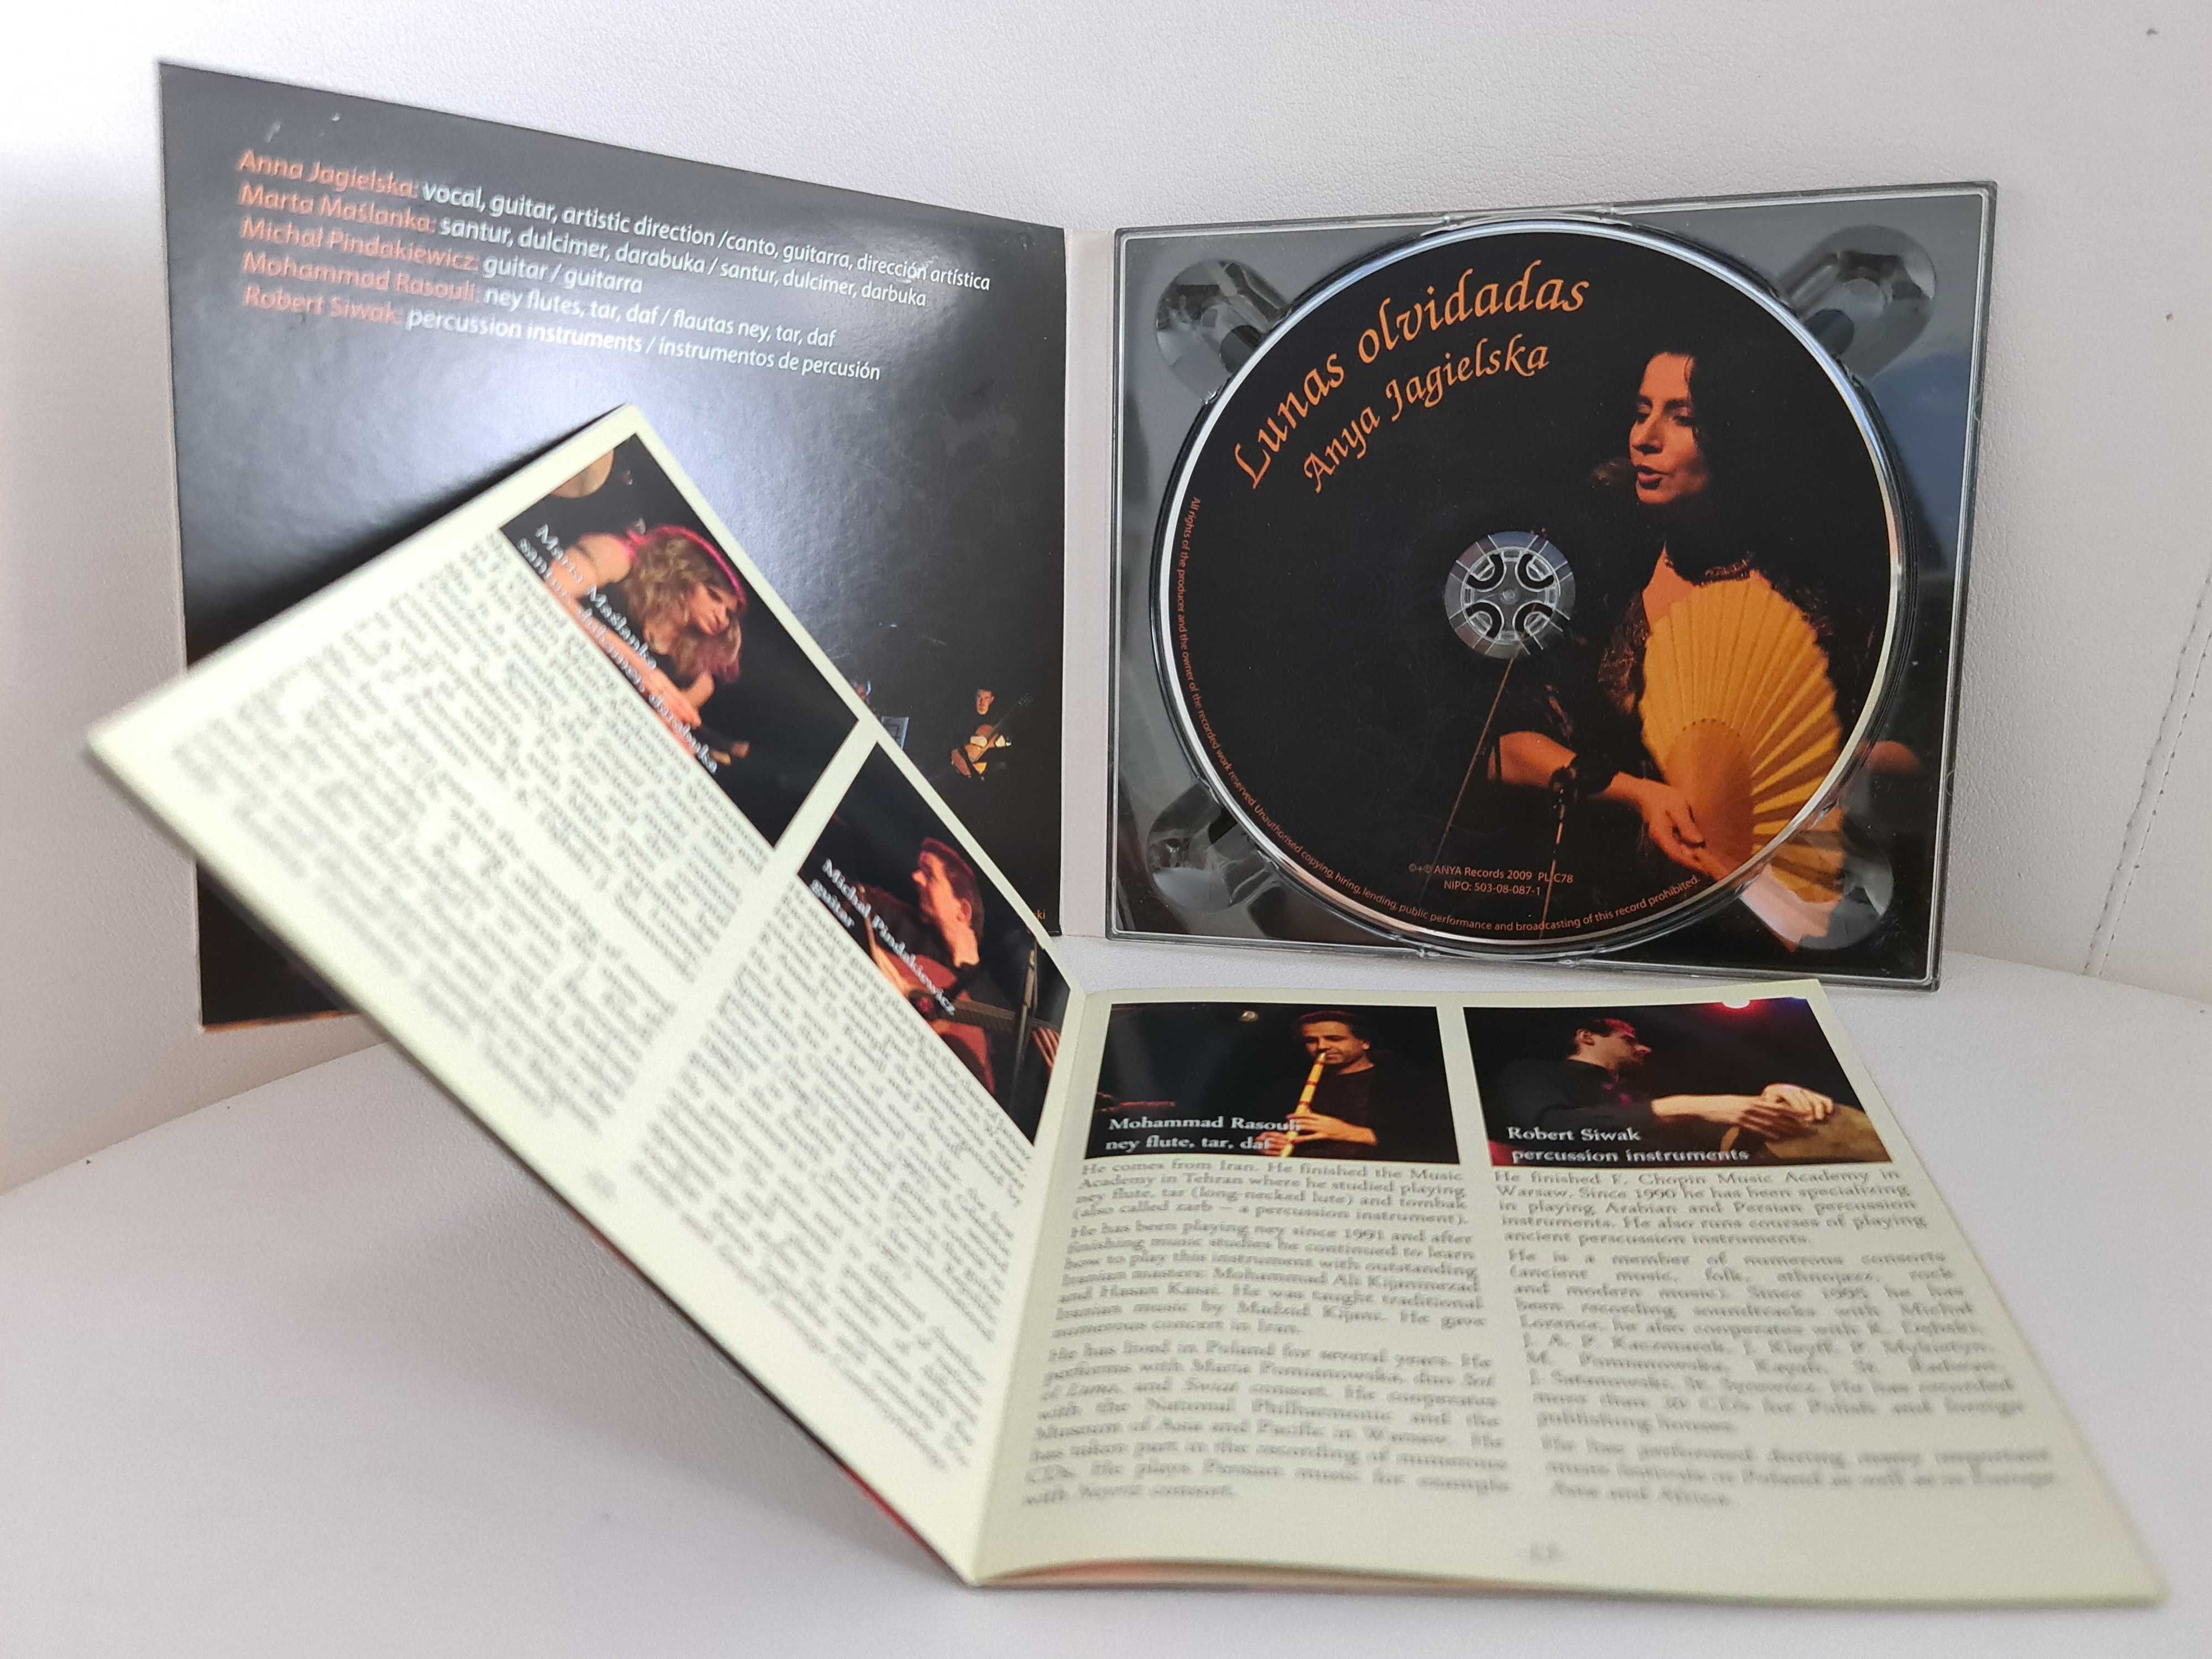 Płyta cd Anya Jagielska Lunas olvidadas Sephardic songs